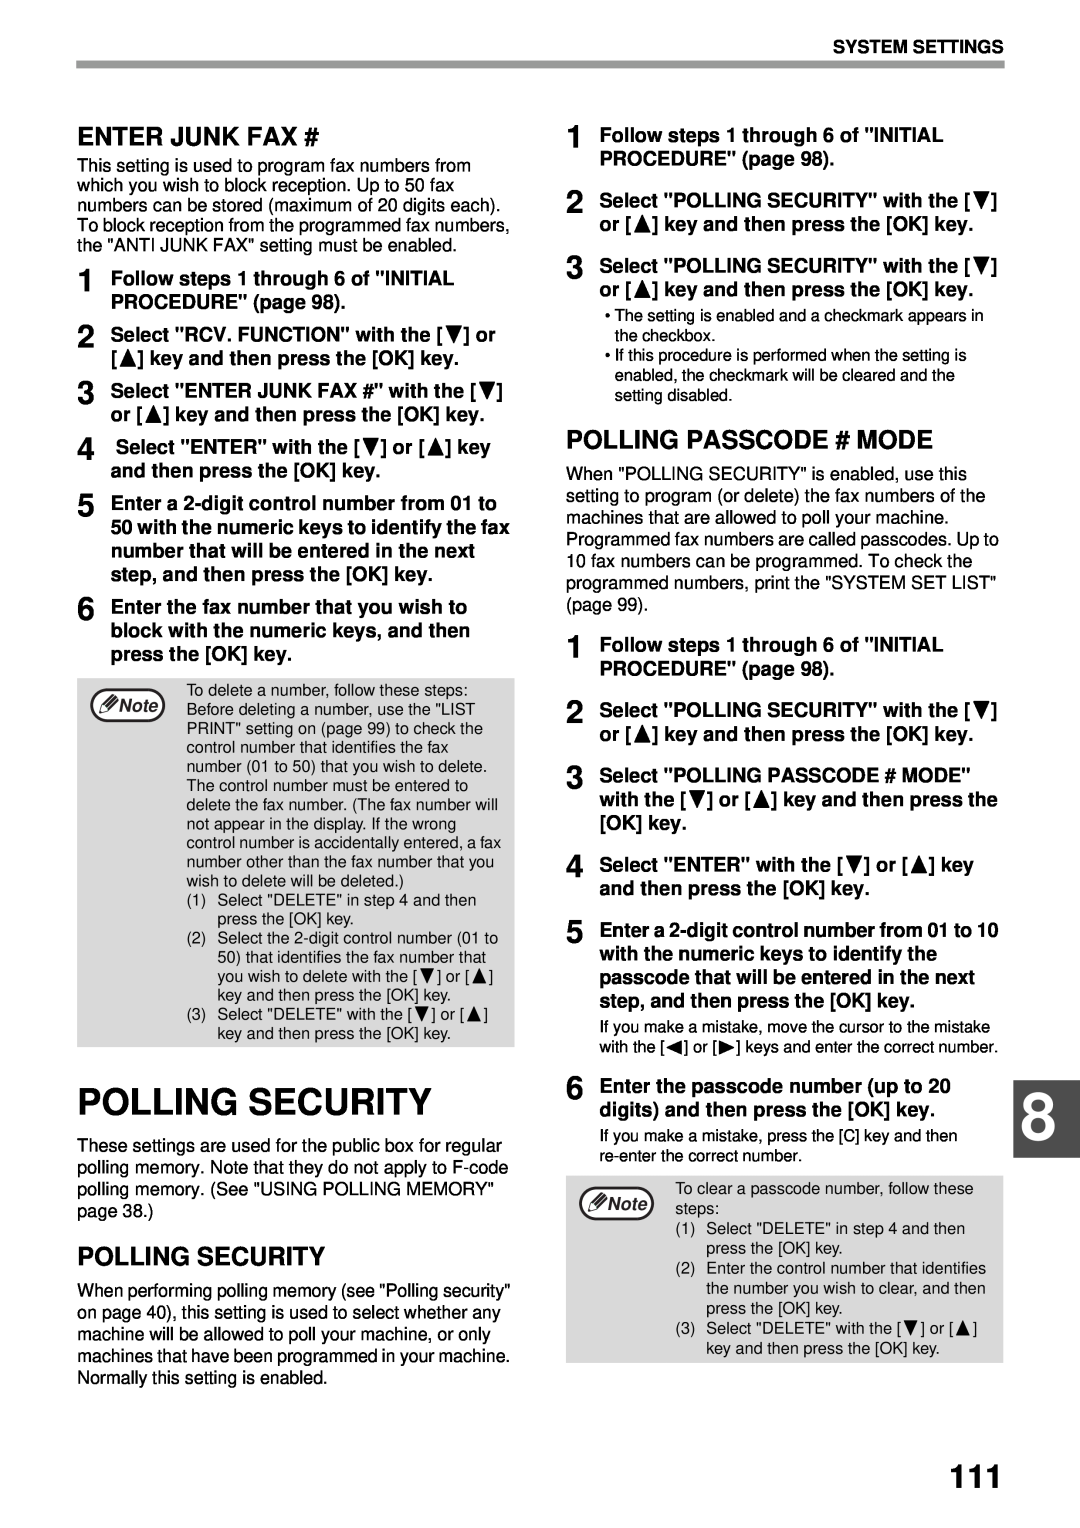 Sharp MX-FX13 appendix Polling Security, Enter Junk Fax #, Polling Passcode # Mode 